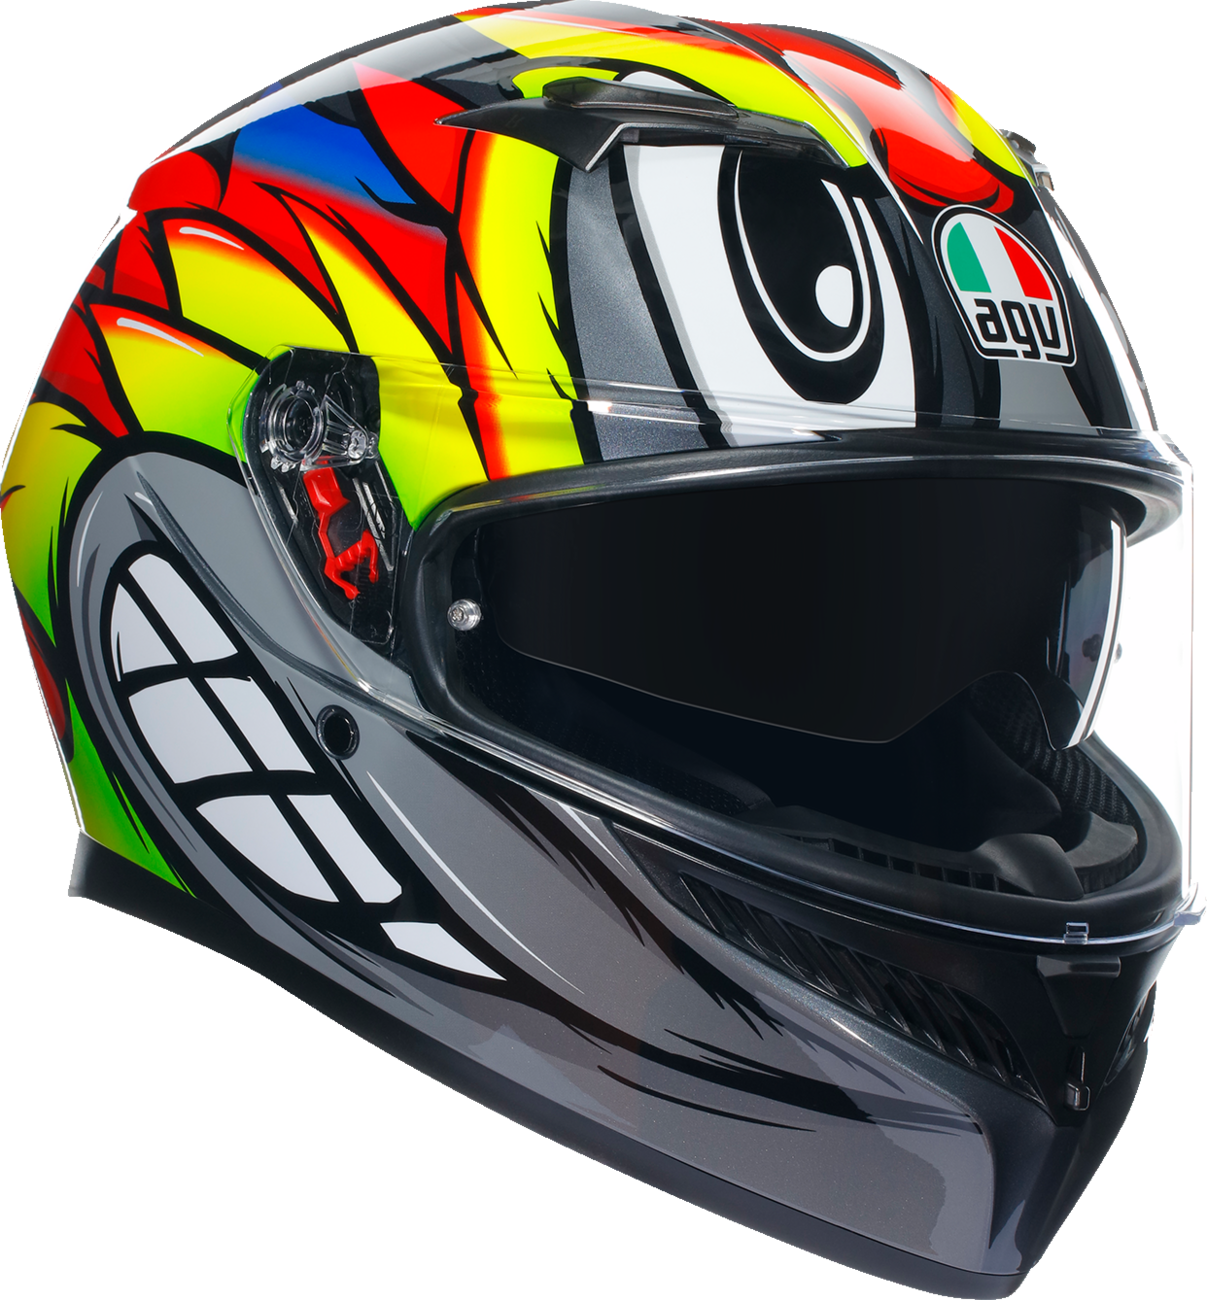 AGV K3 Helmet - Birdy 2.0 - Gray/Yellow/Red - Large 2118381004012L